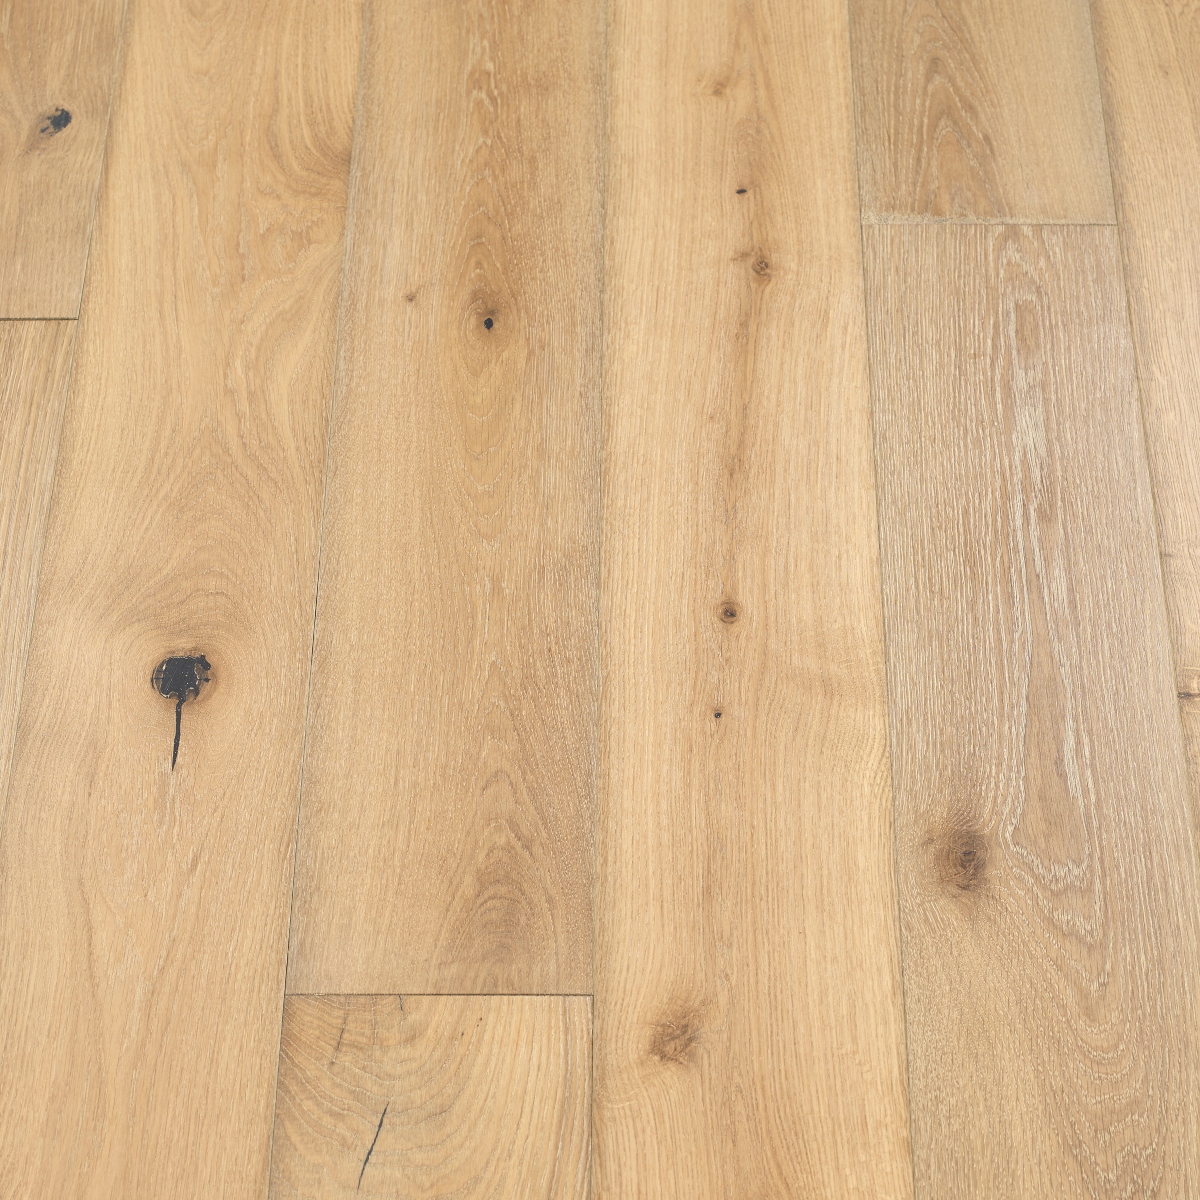 Shandy 190mm x 18mm x 1900mm Bespoke Wood Flooring